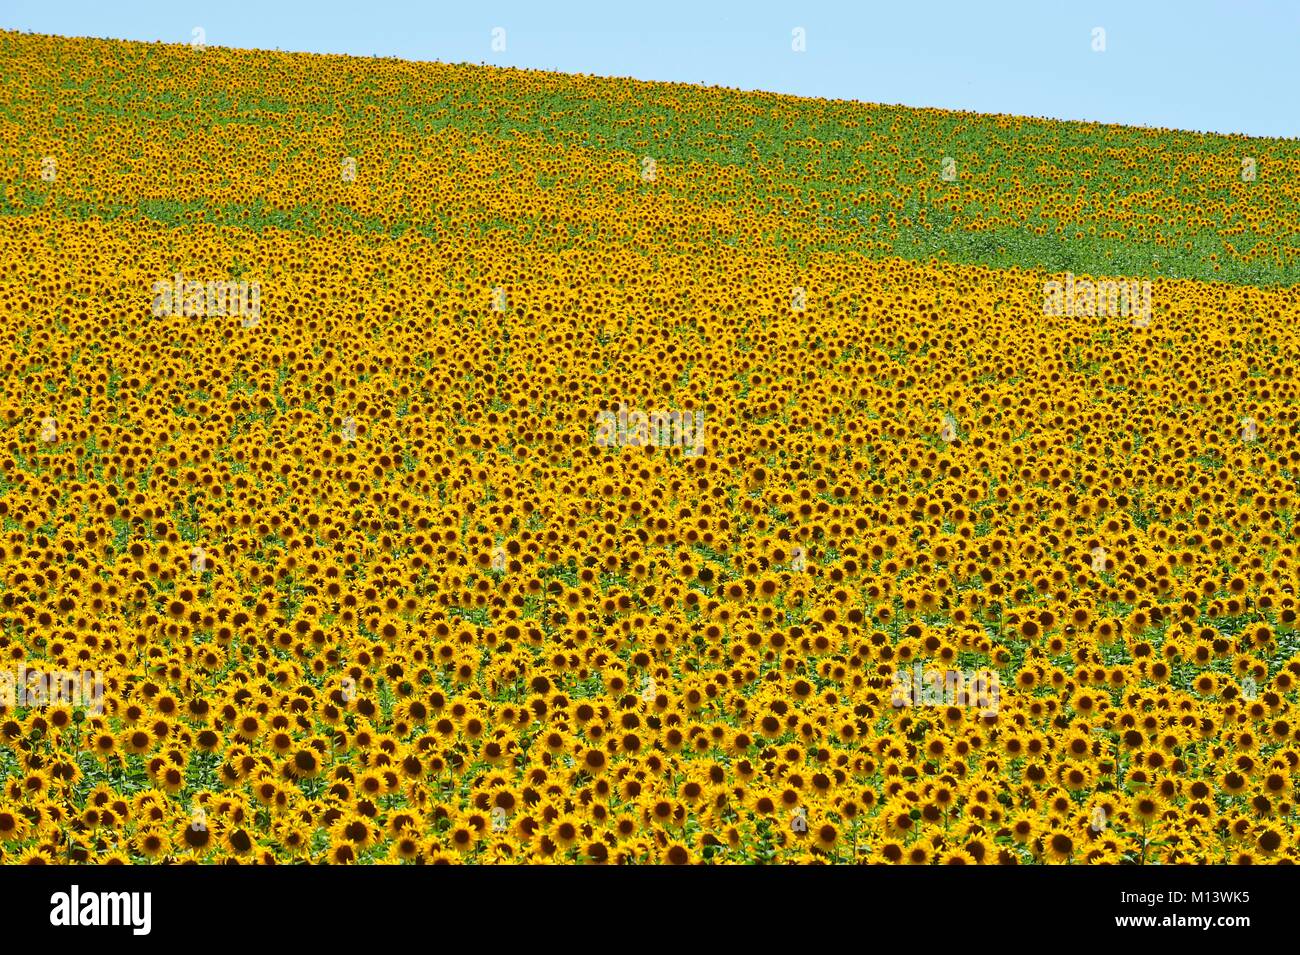 Spain, Andalusia, Jerez de la Frontera, sunflower fields Stock Photo